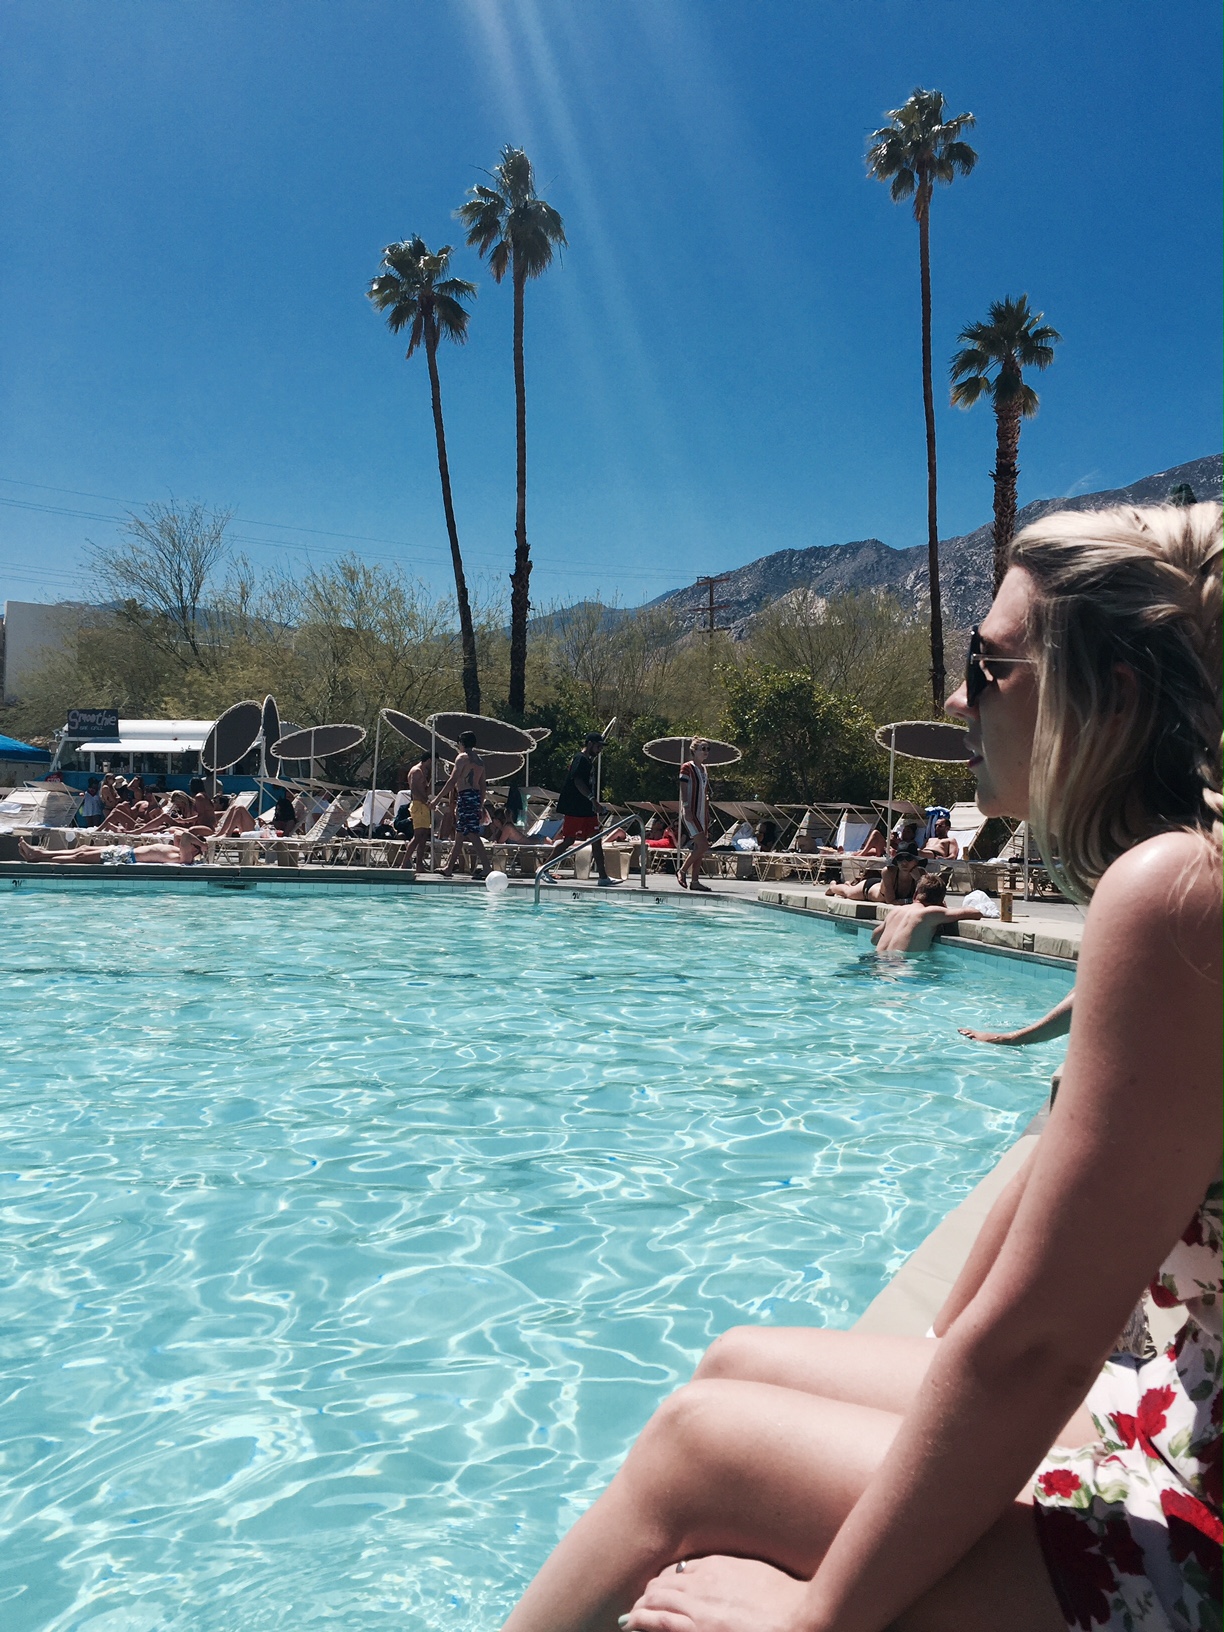 Ace Hotel Palm Springs, Coachella